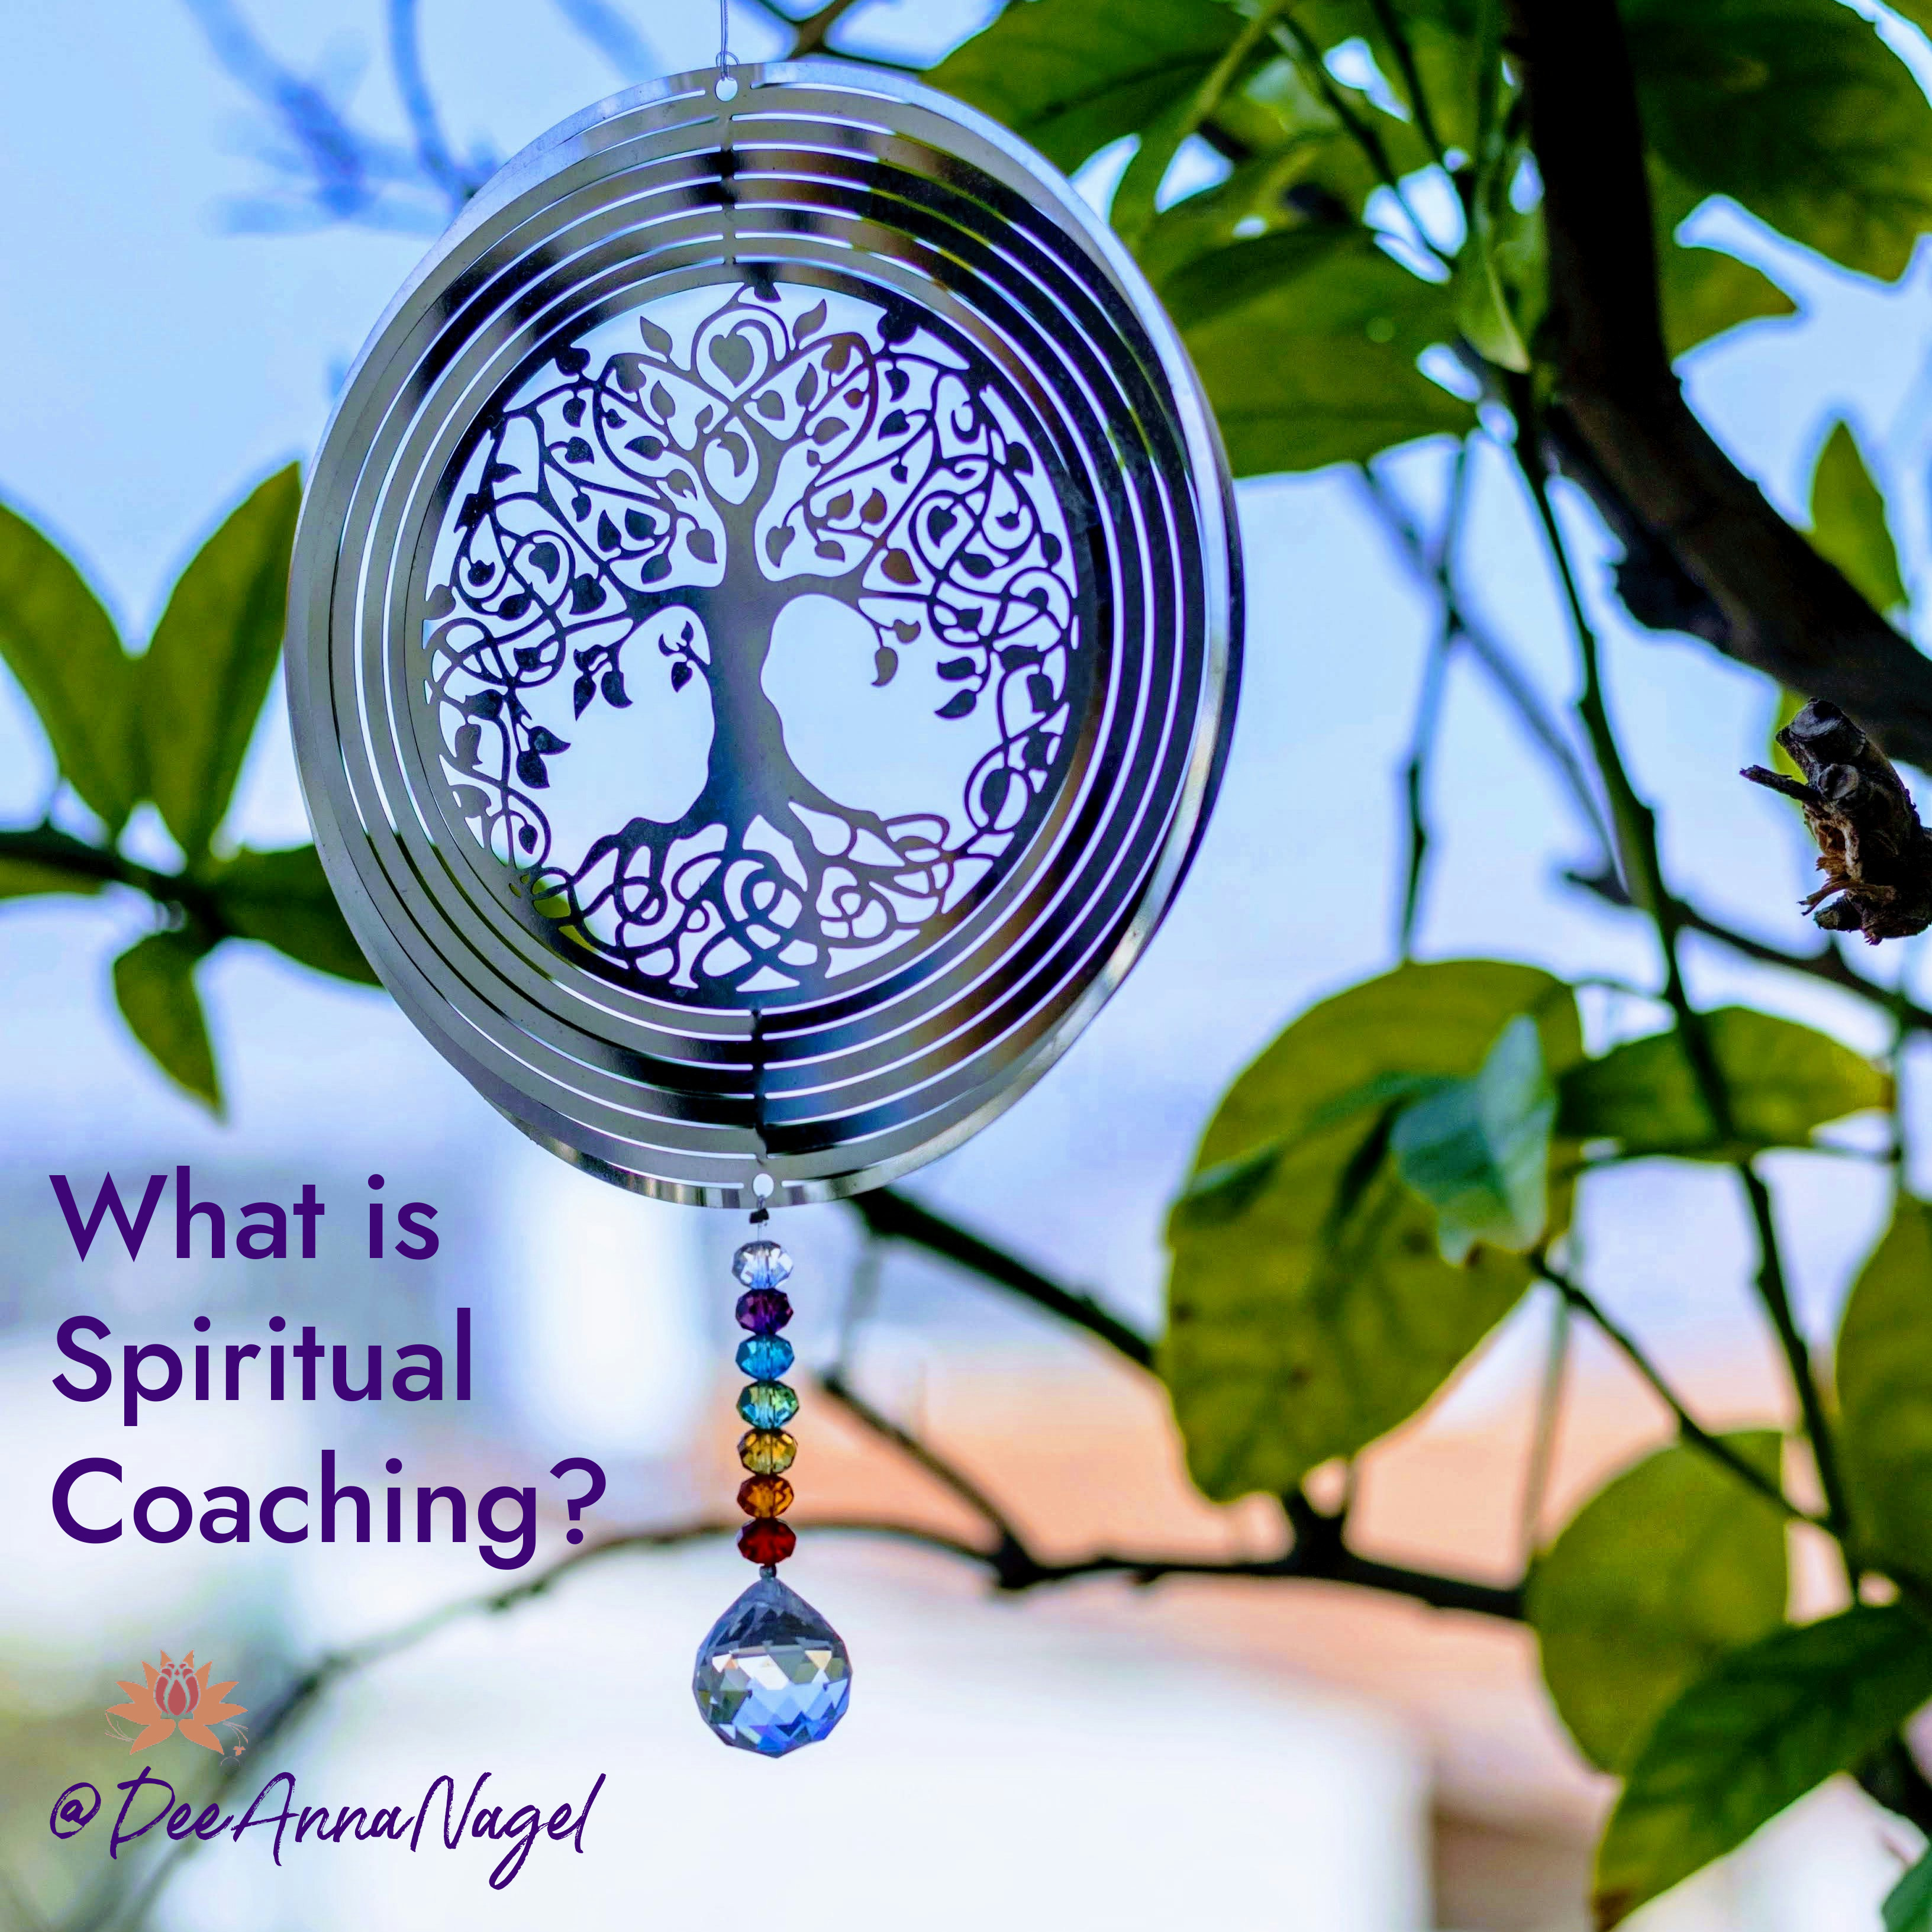 What is spiritual coaching